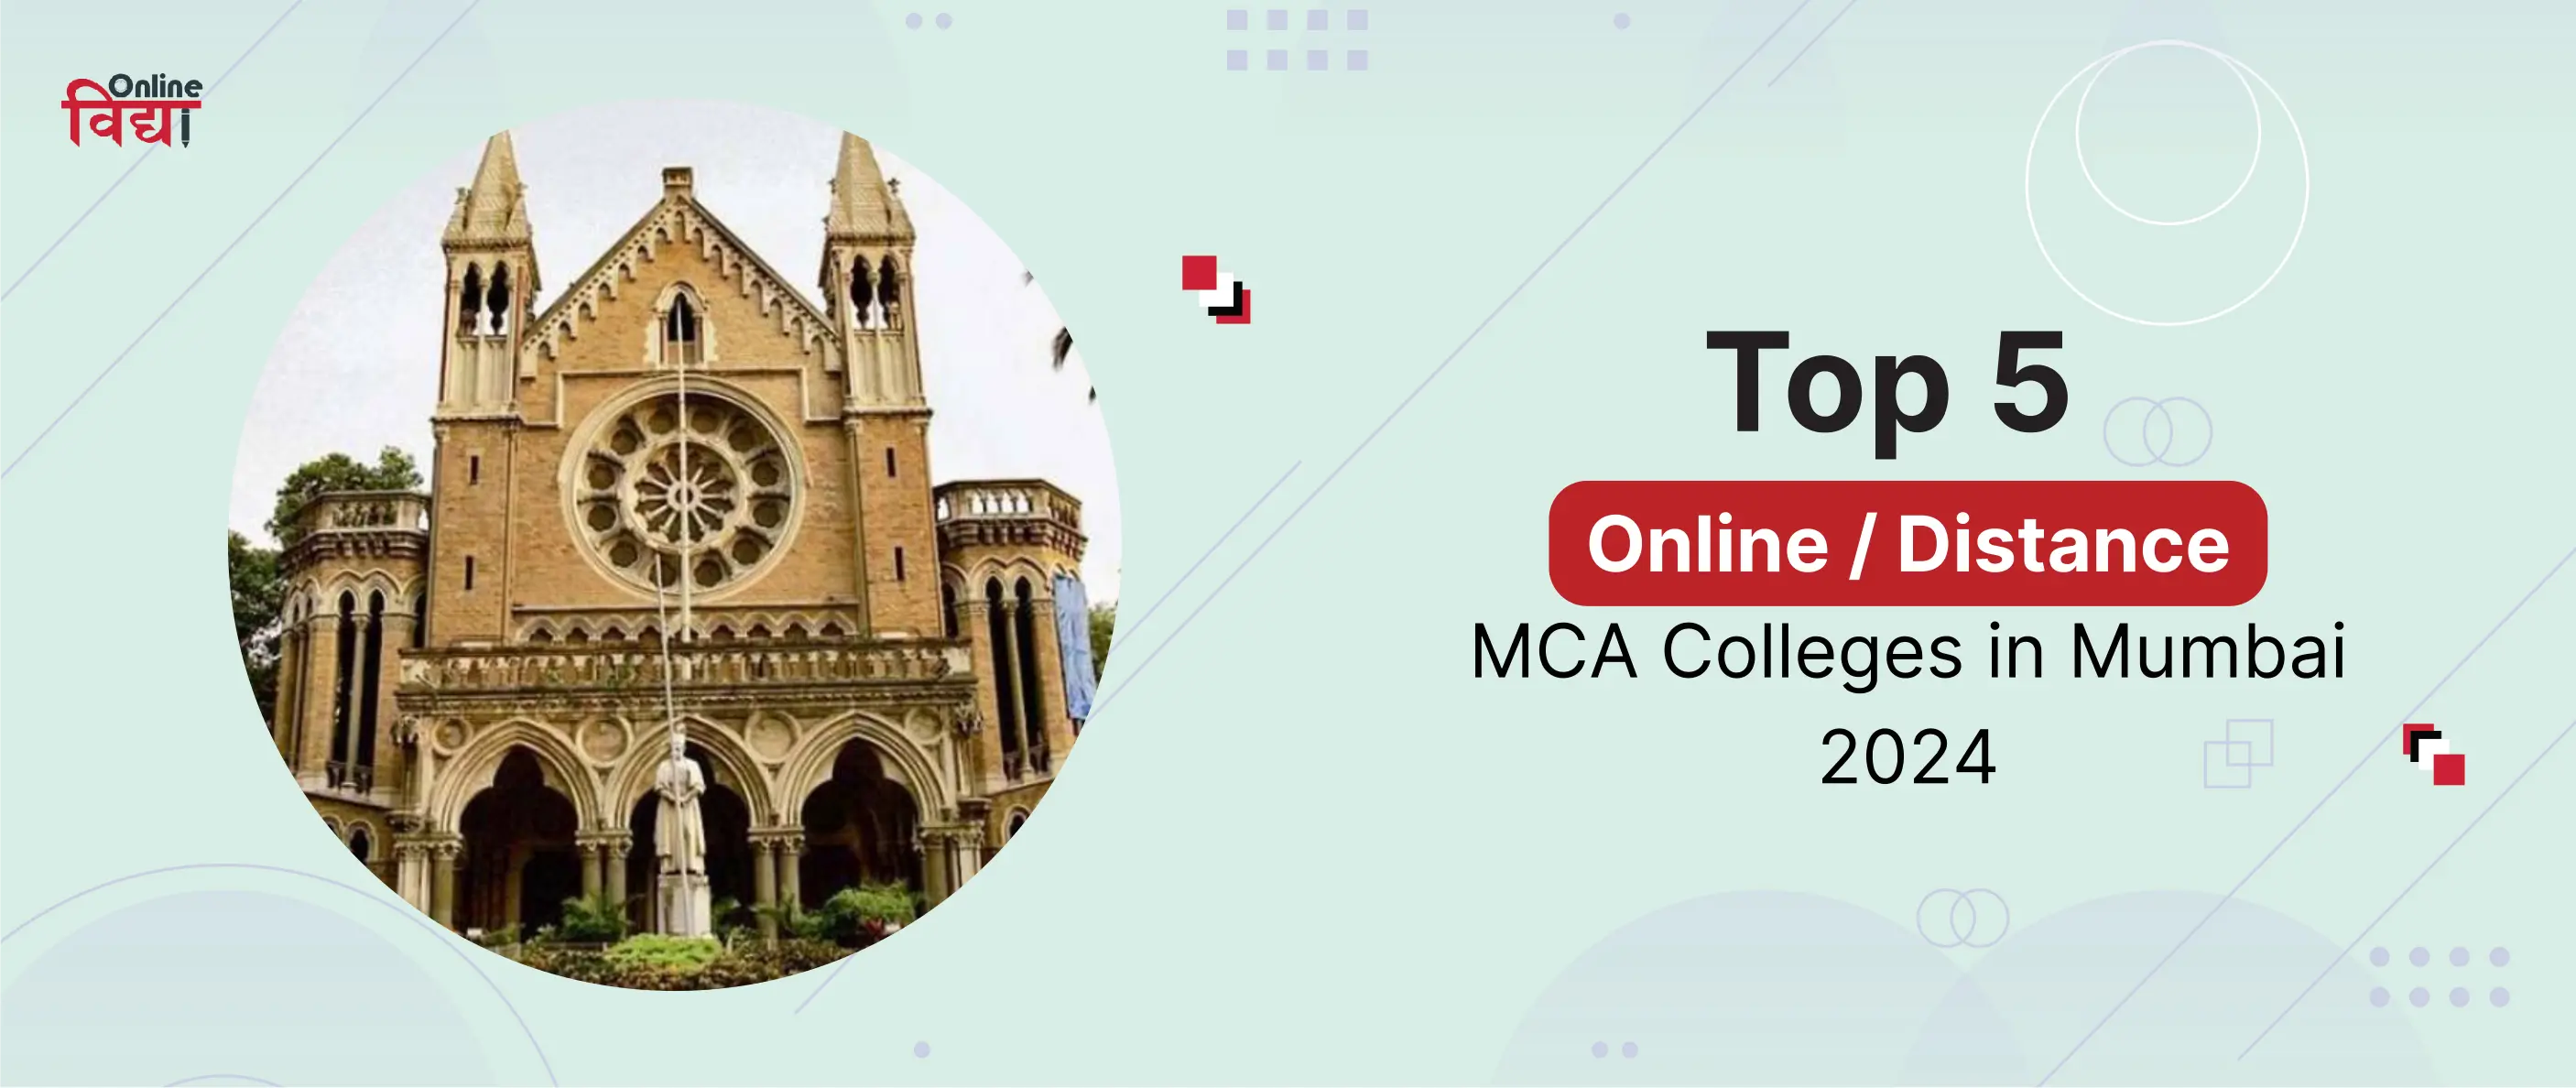 Top 5 Online/Distance MCA Colleges in Mumbai 2024